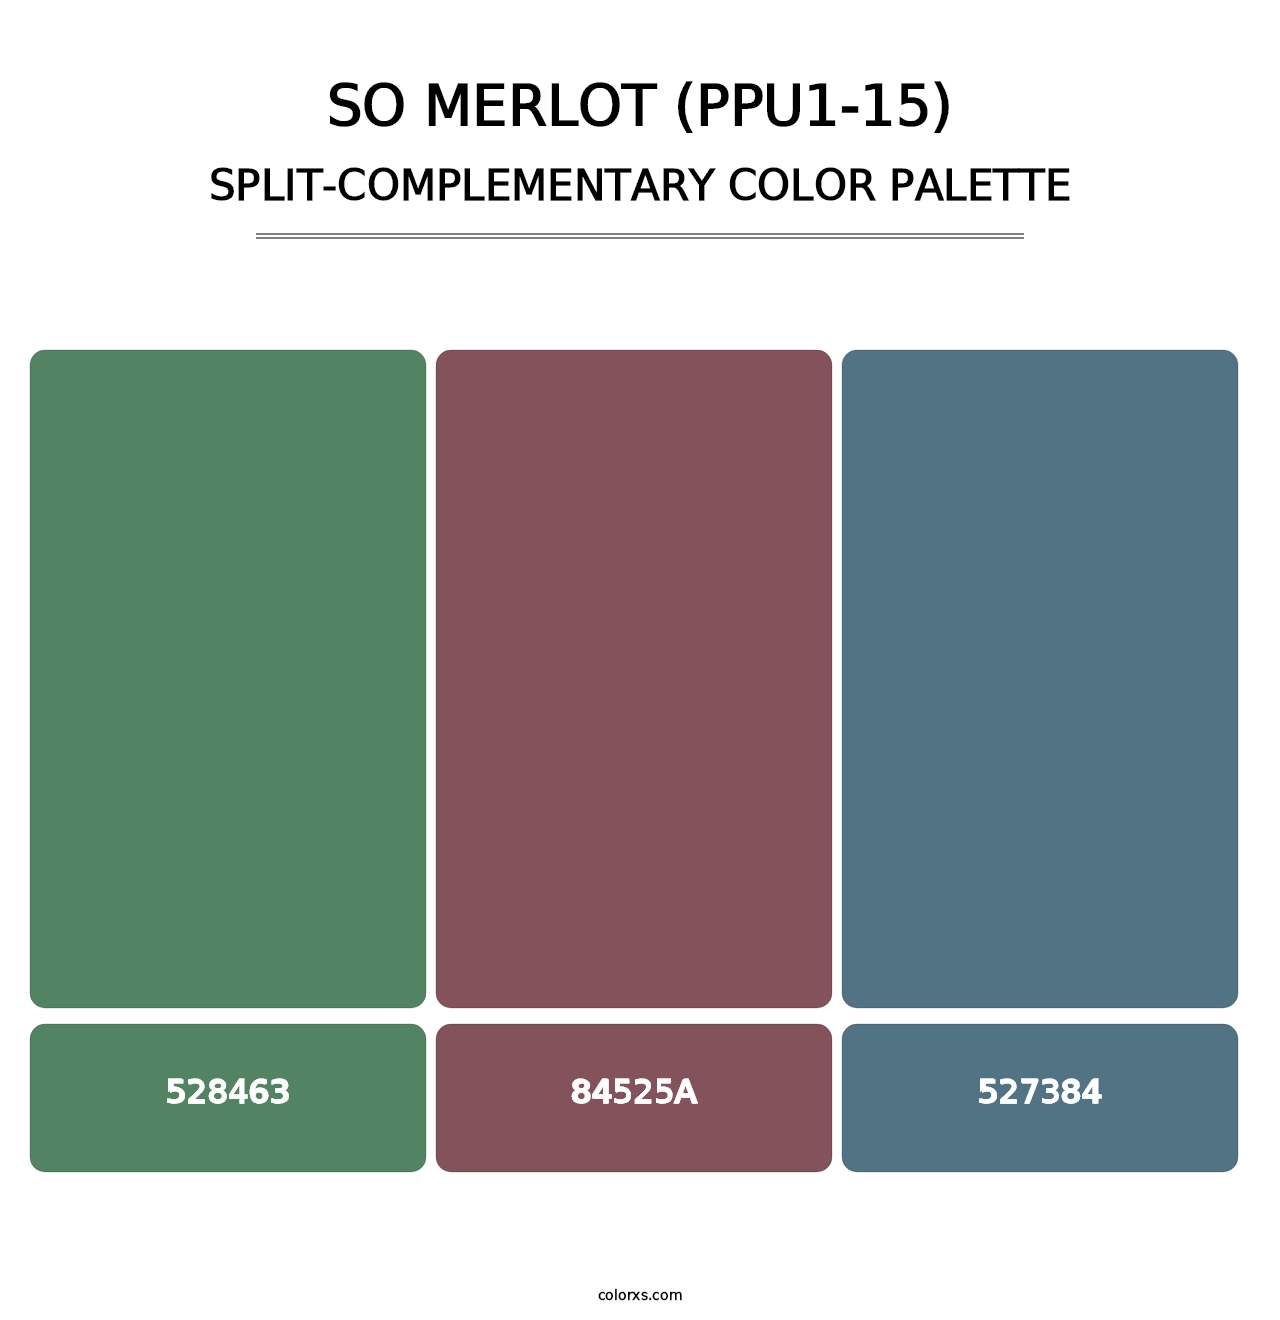 So Merlot (PPU1-15) - Split-Complementary Color Palette